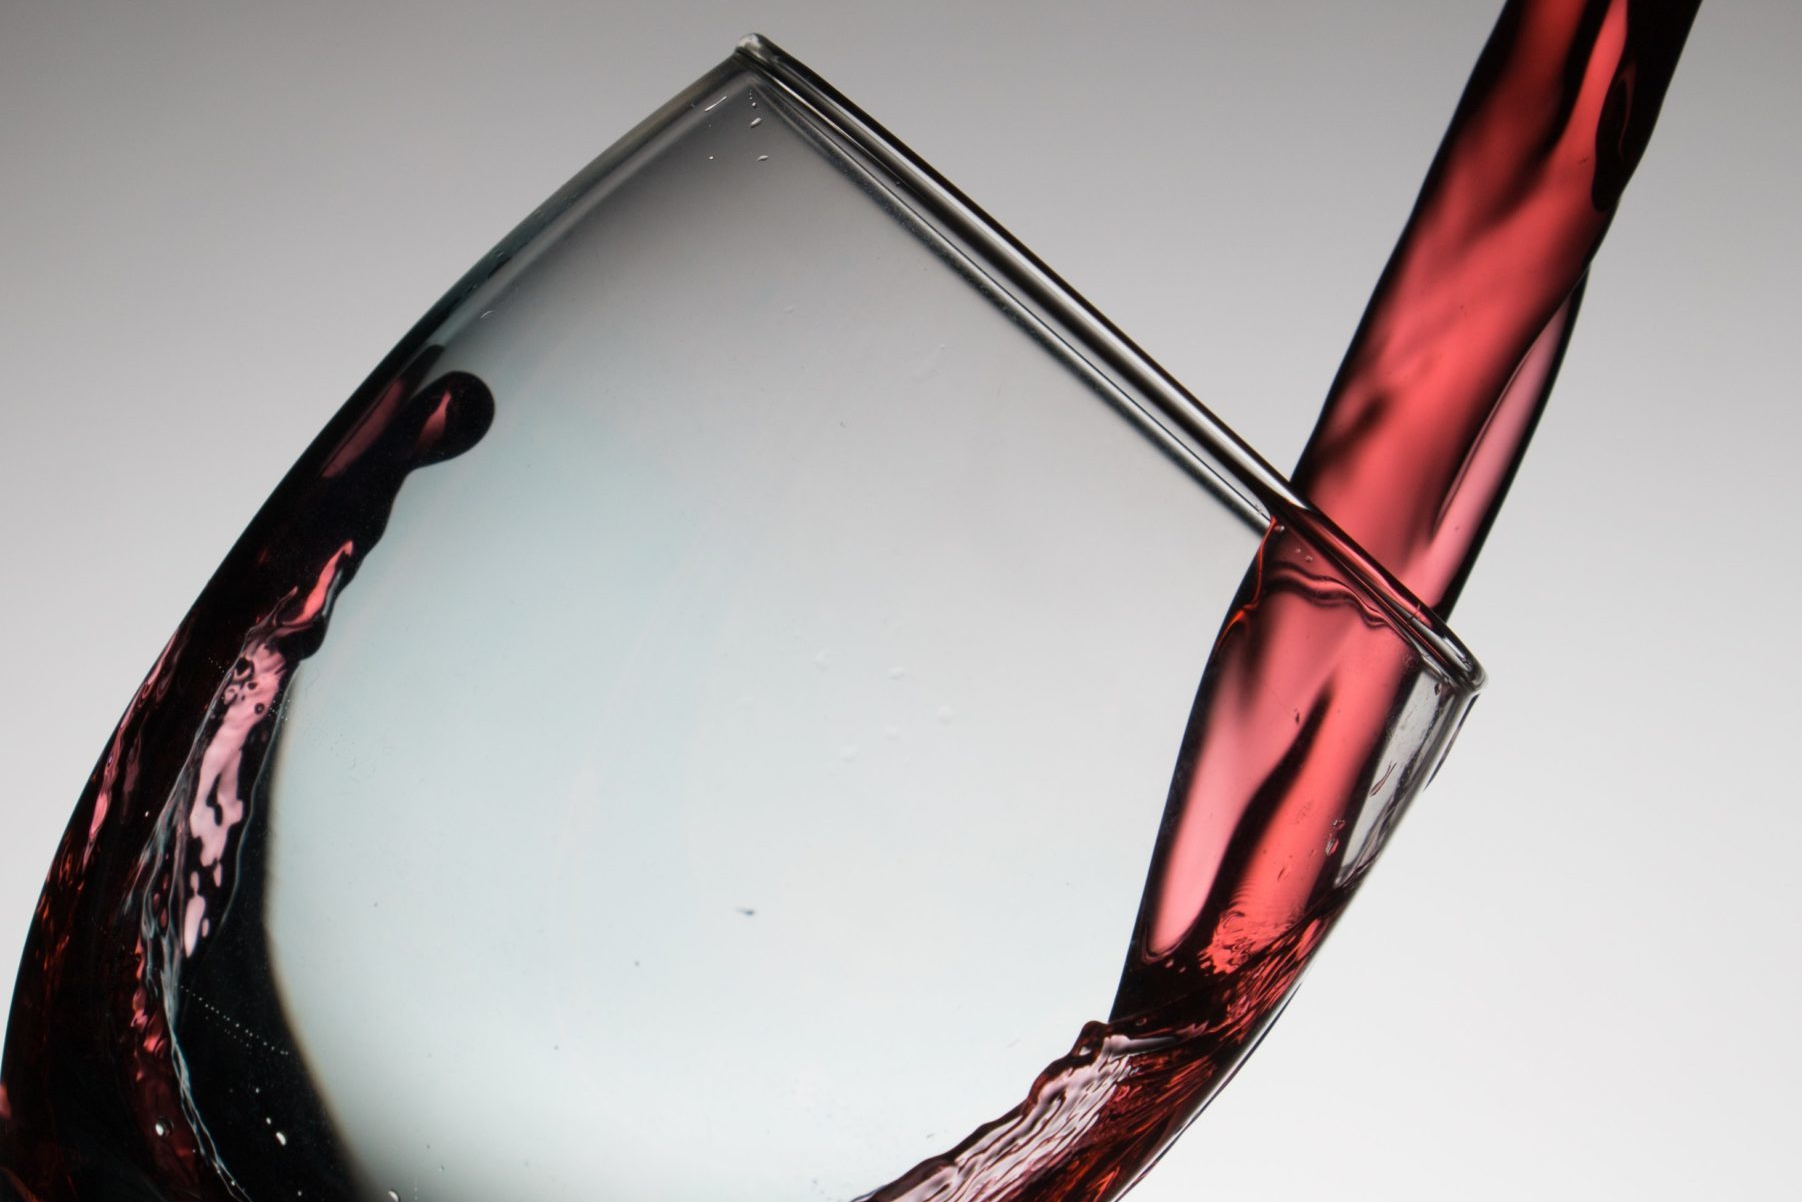 Wine poured into a wine glass